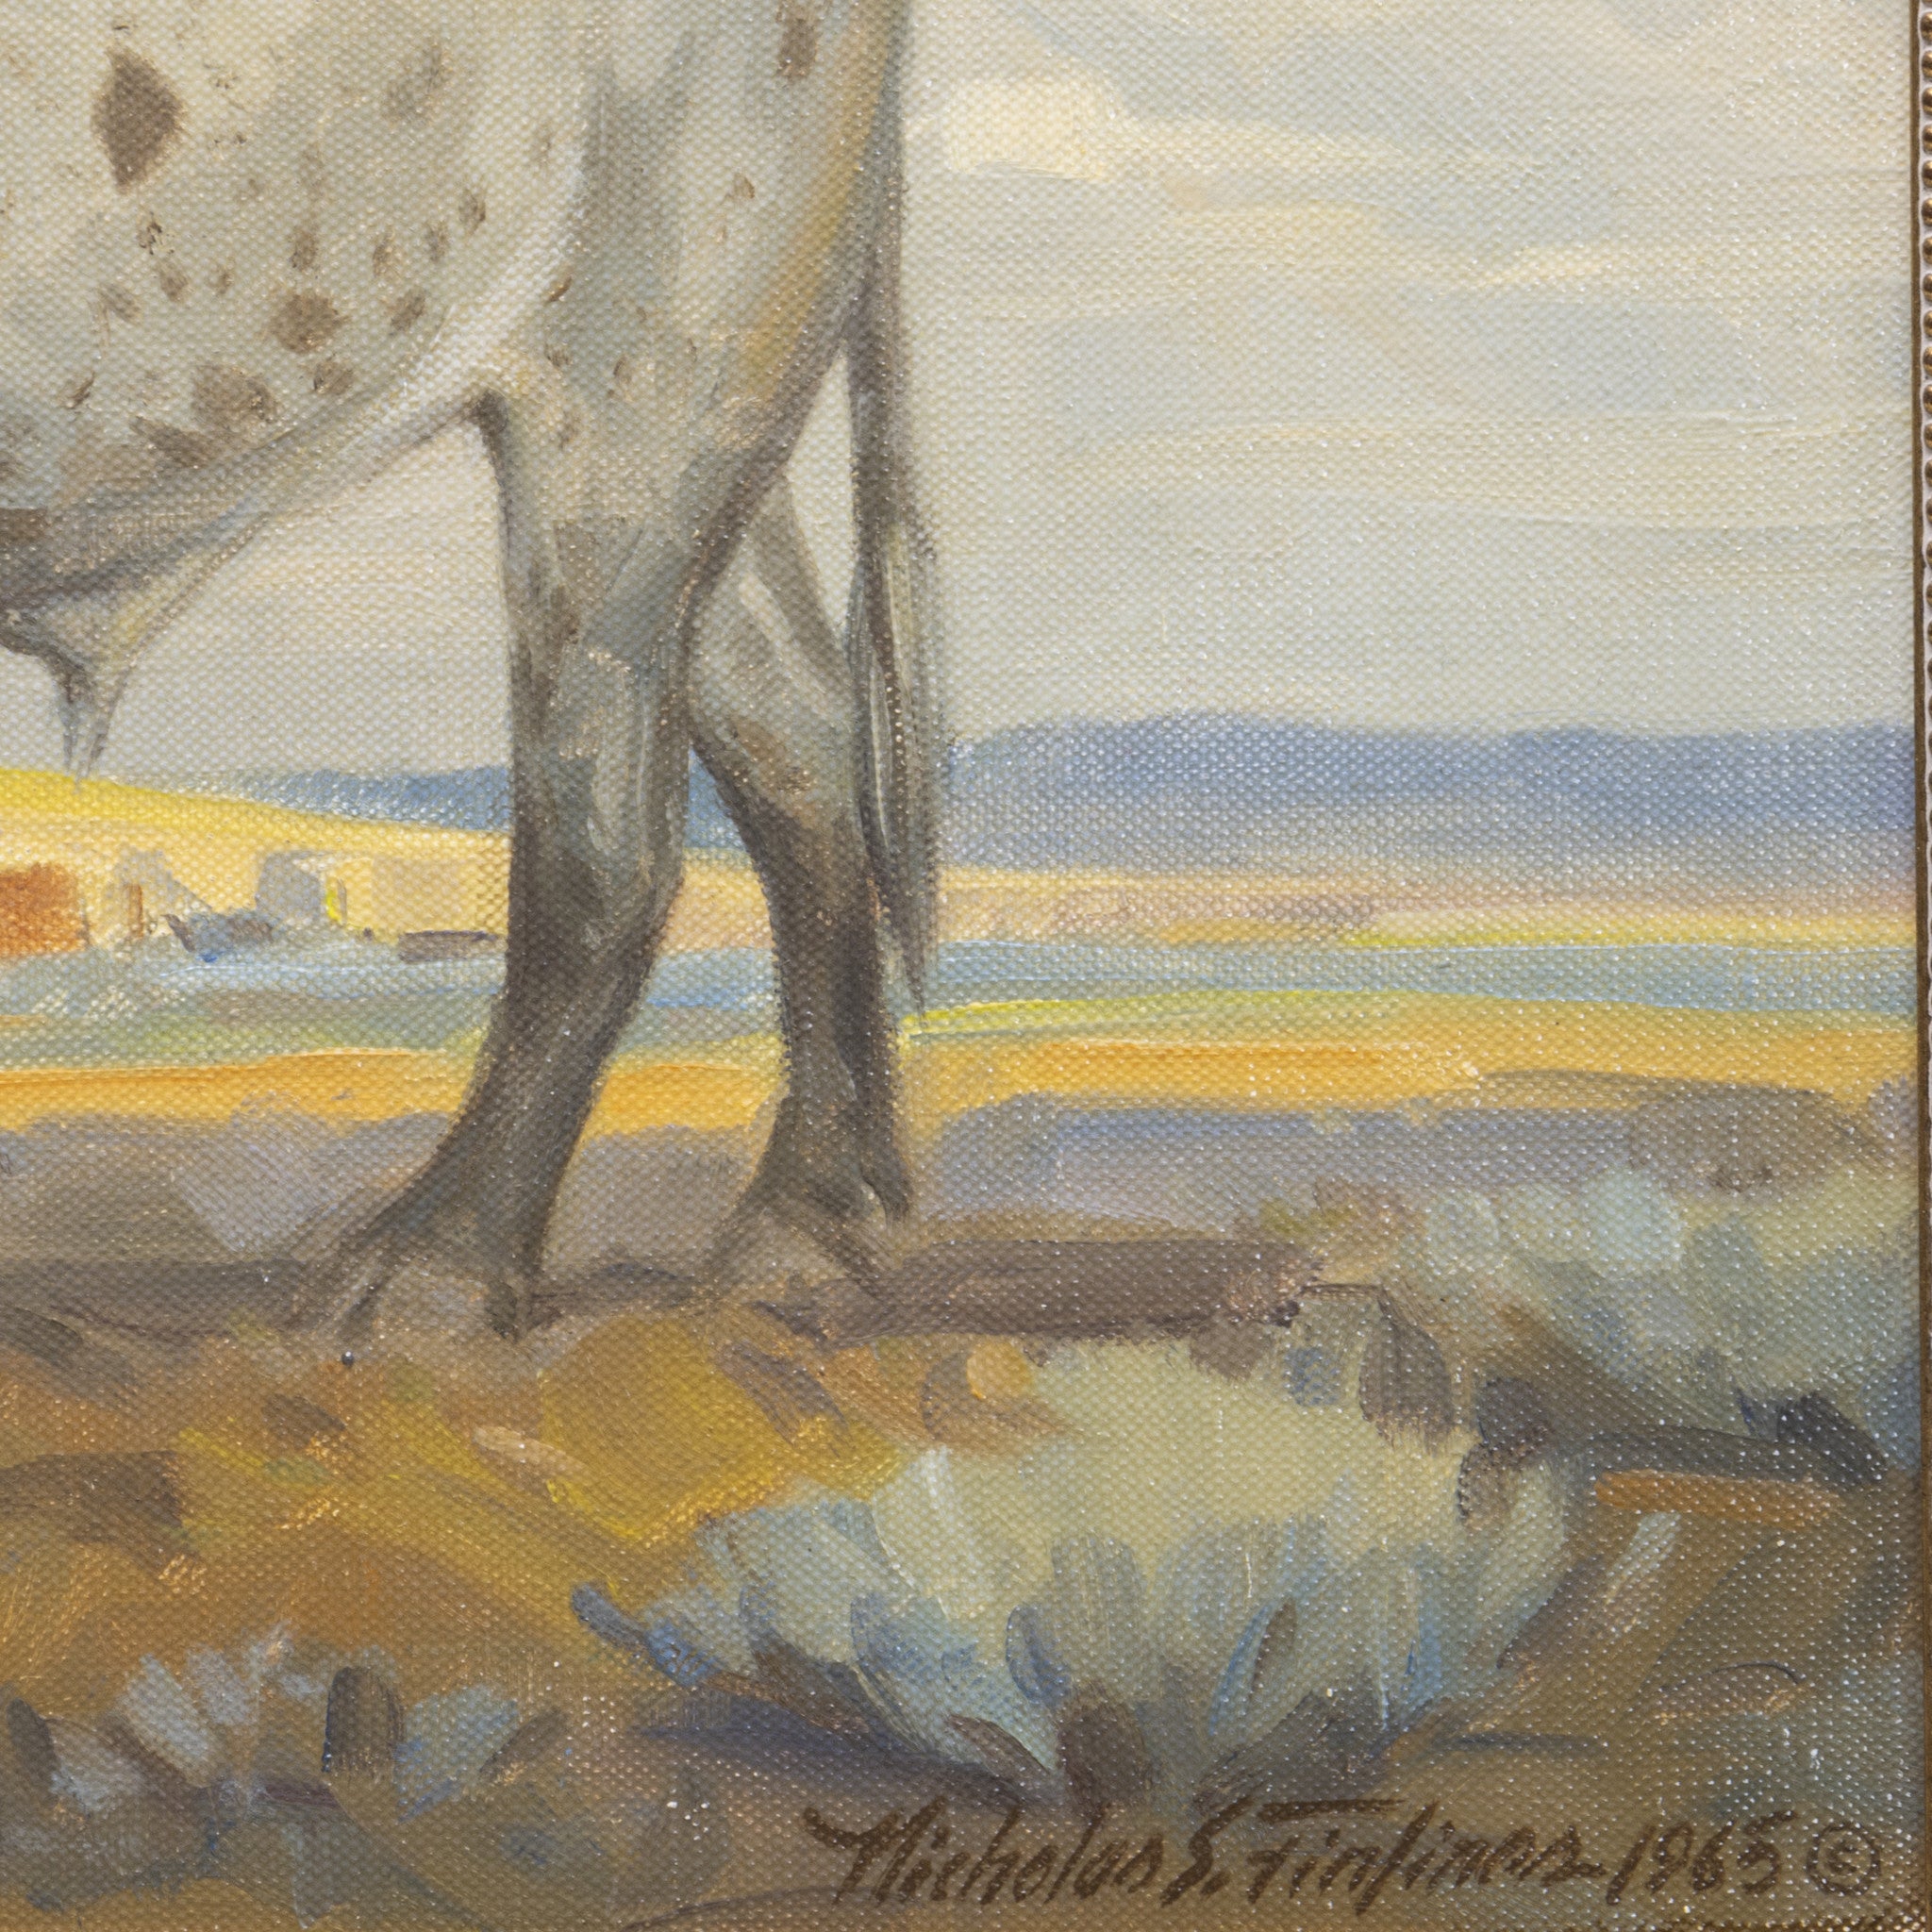 "The Longhorn Bull" by Nicholas S. Firfires